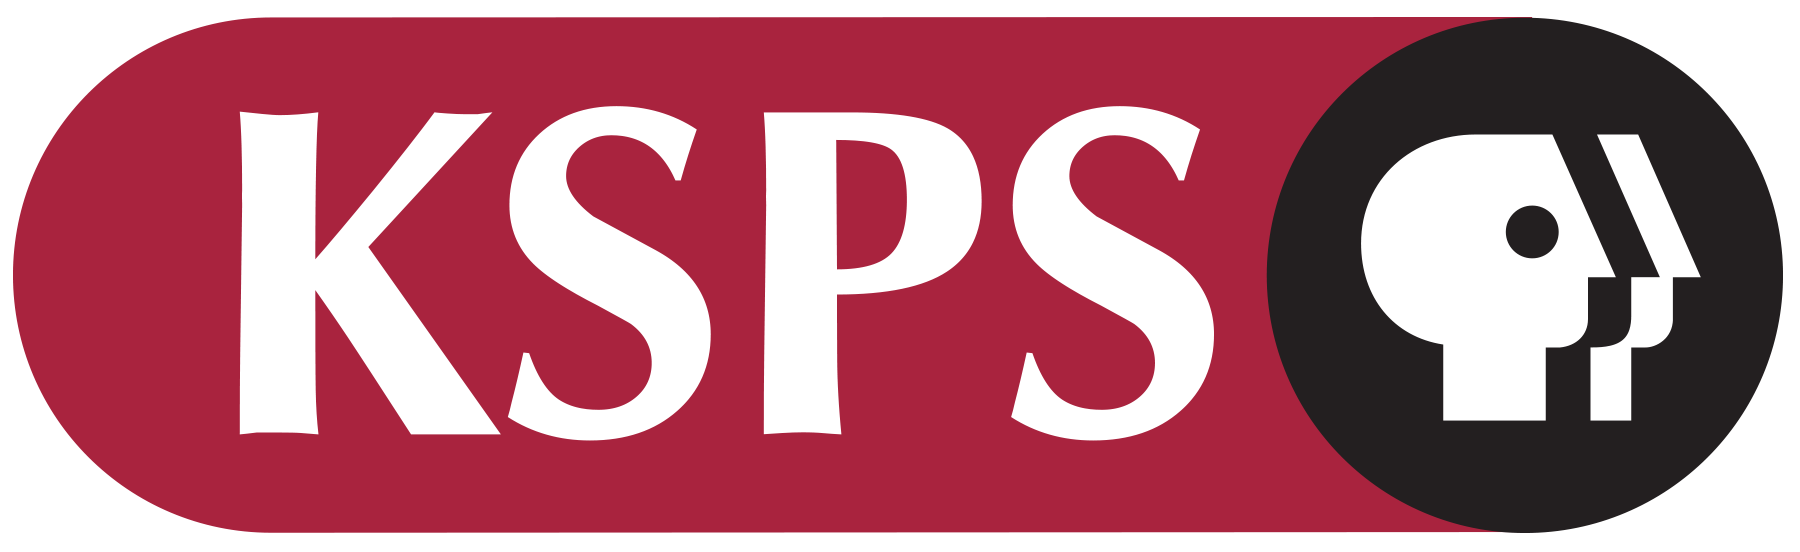 KSPS Public Television logo